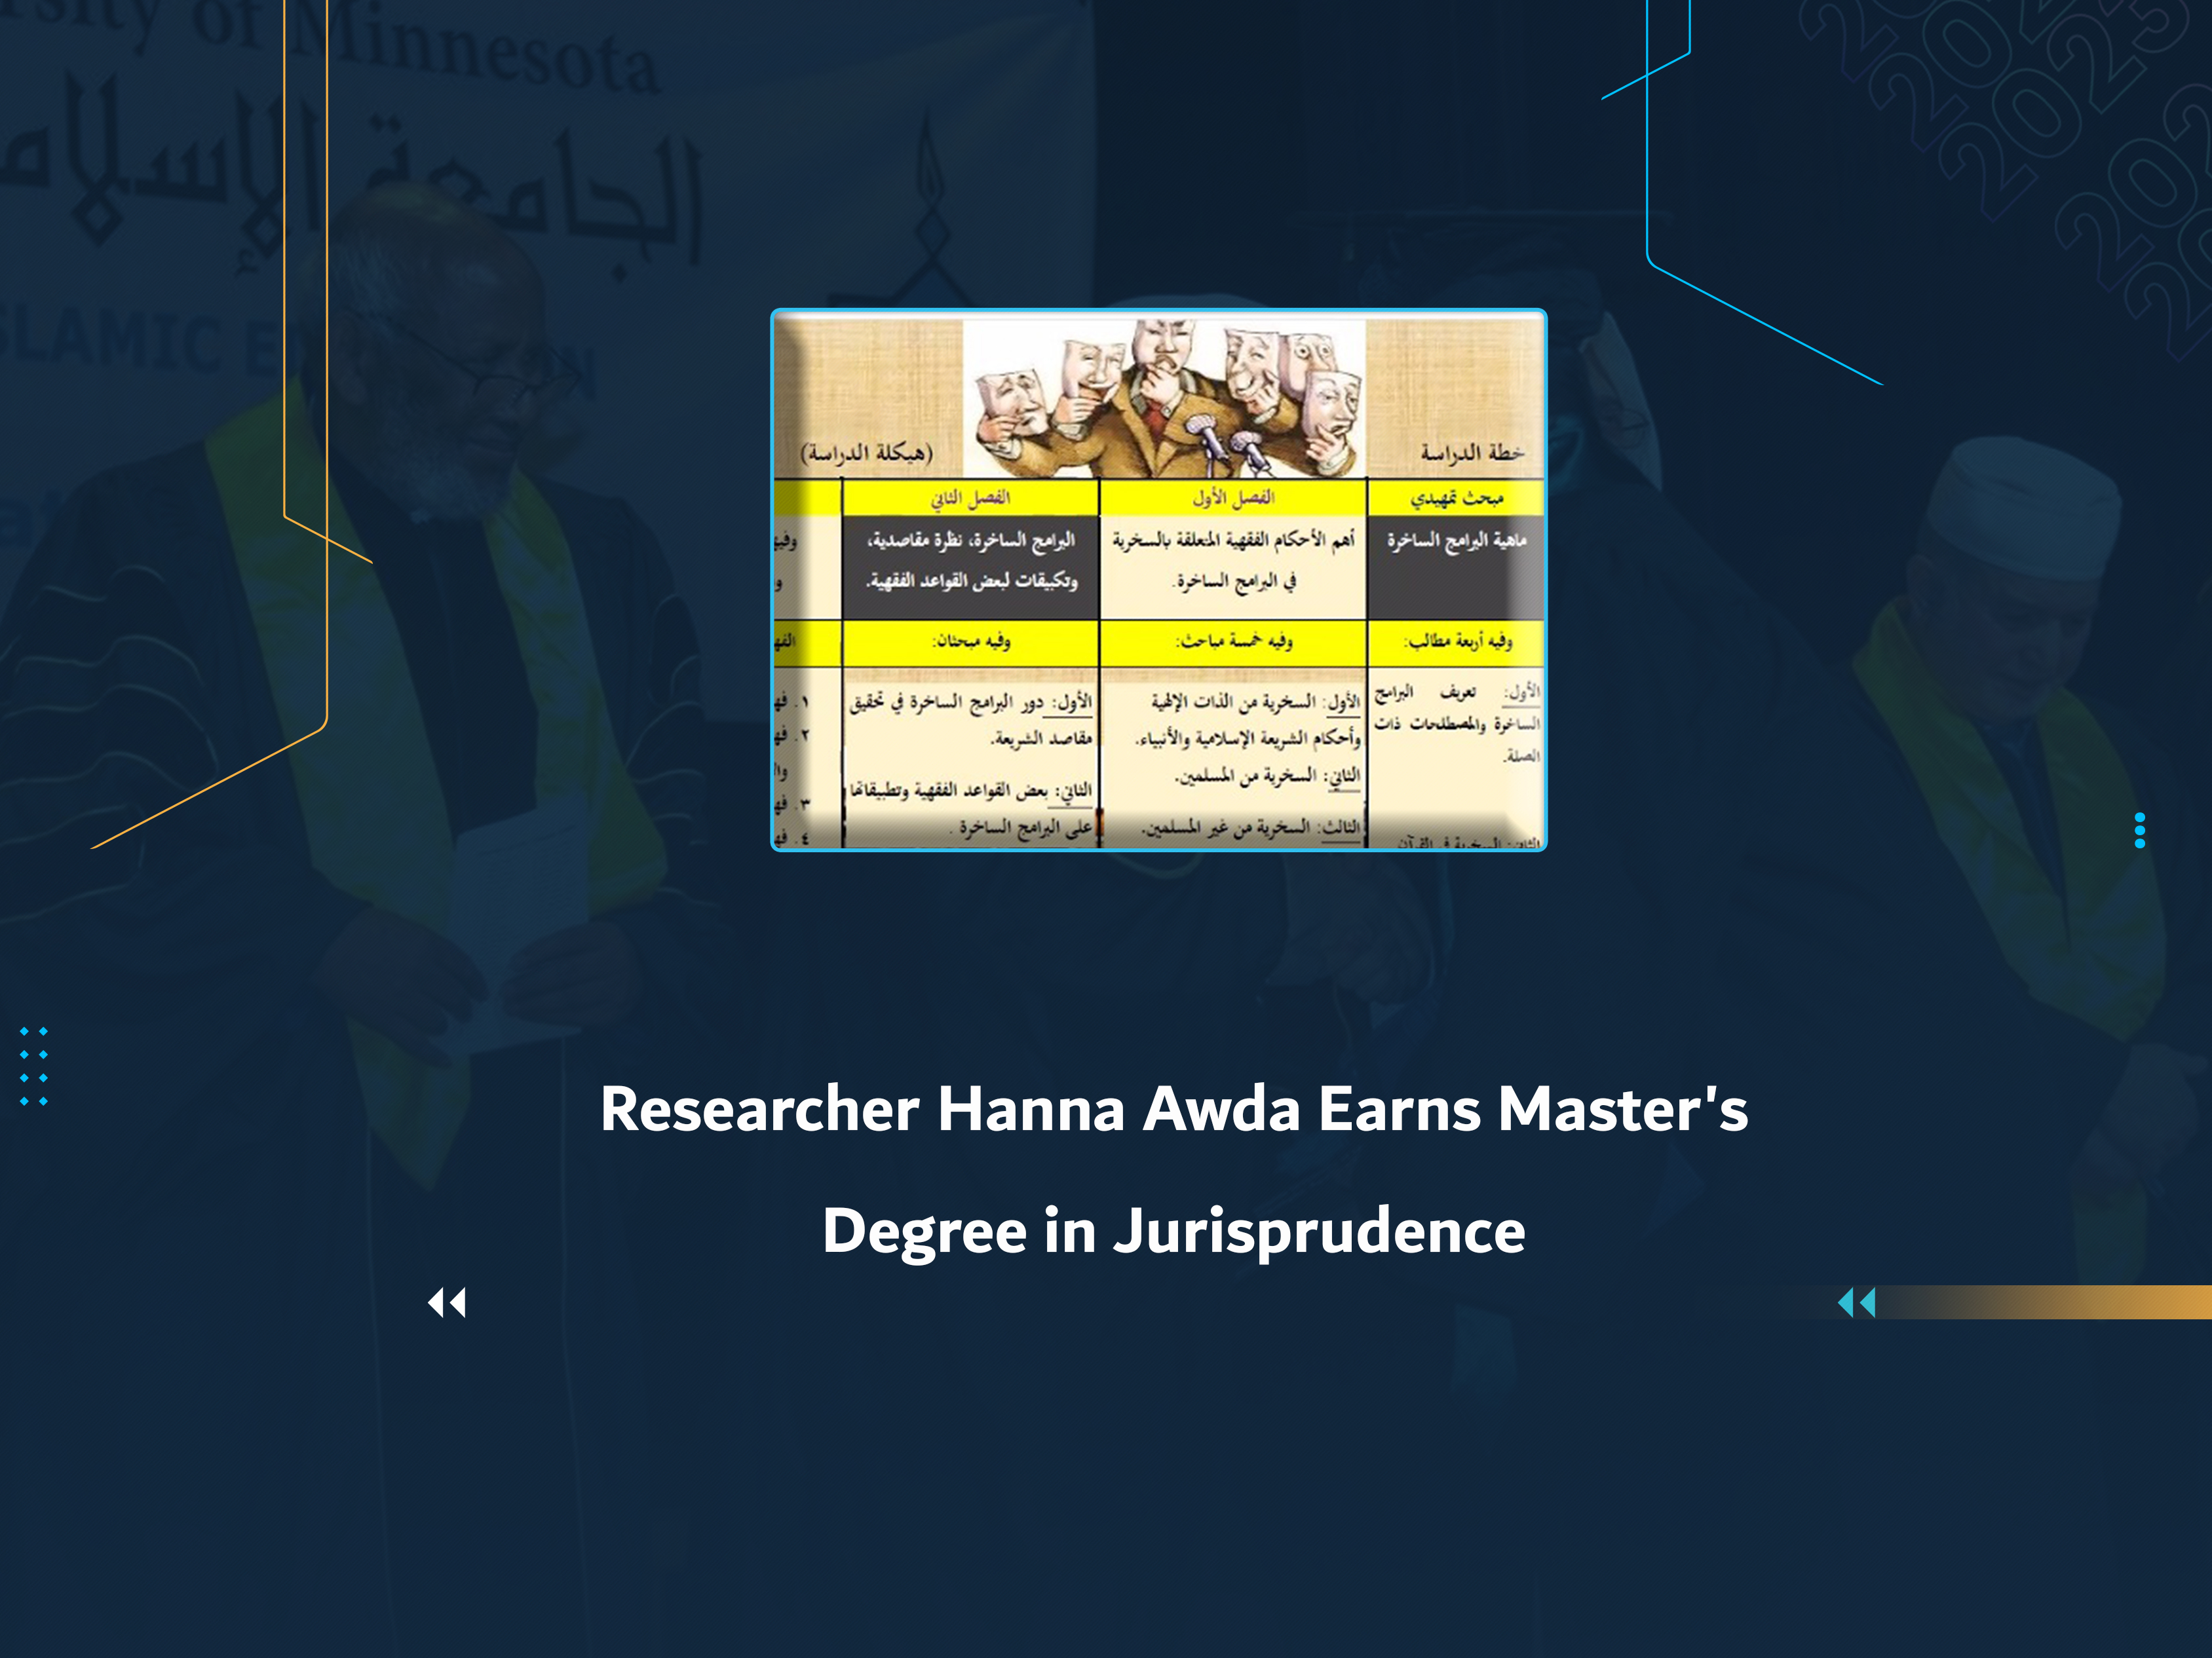 Researcher Hanna Awda Earns Master's Degree in Jurisprudence